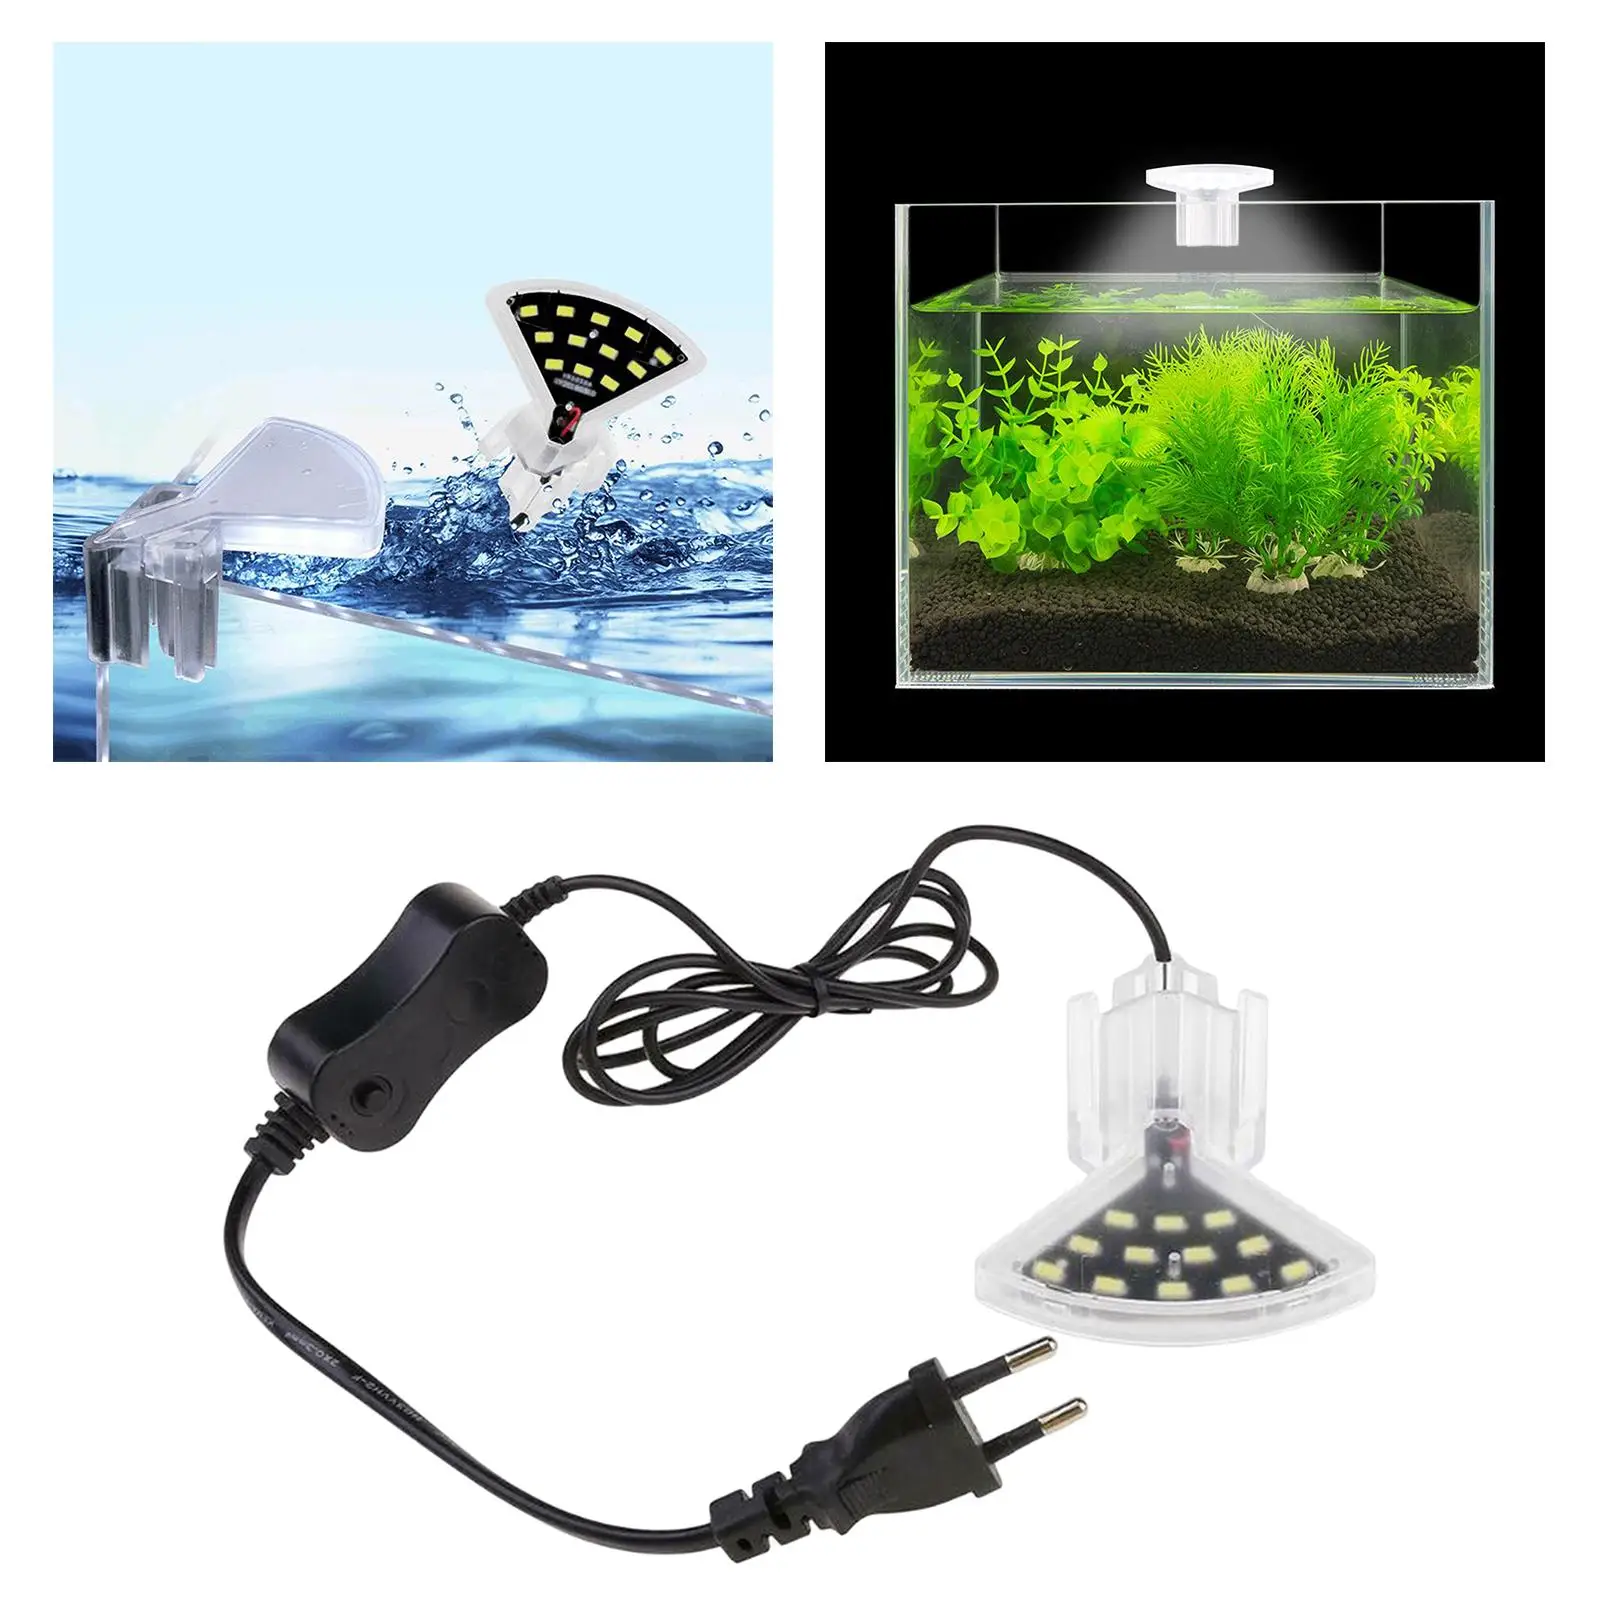 Mini Waterproof Clip LED Aquarium Light Tank Aquatic Plants Grow Lamp Home Decoration Fish Tank Accessories